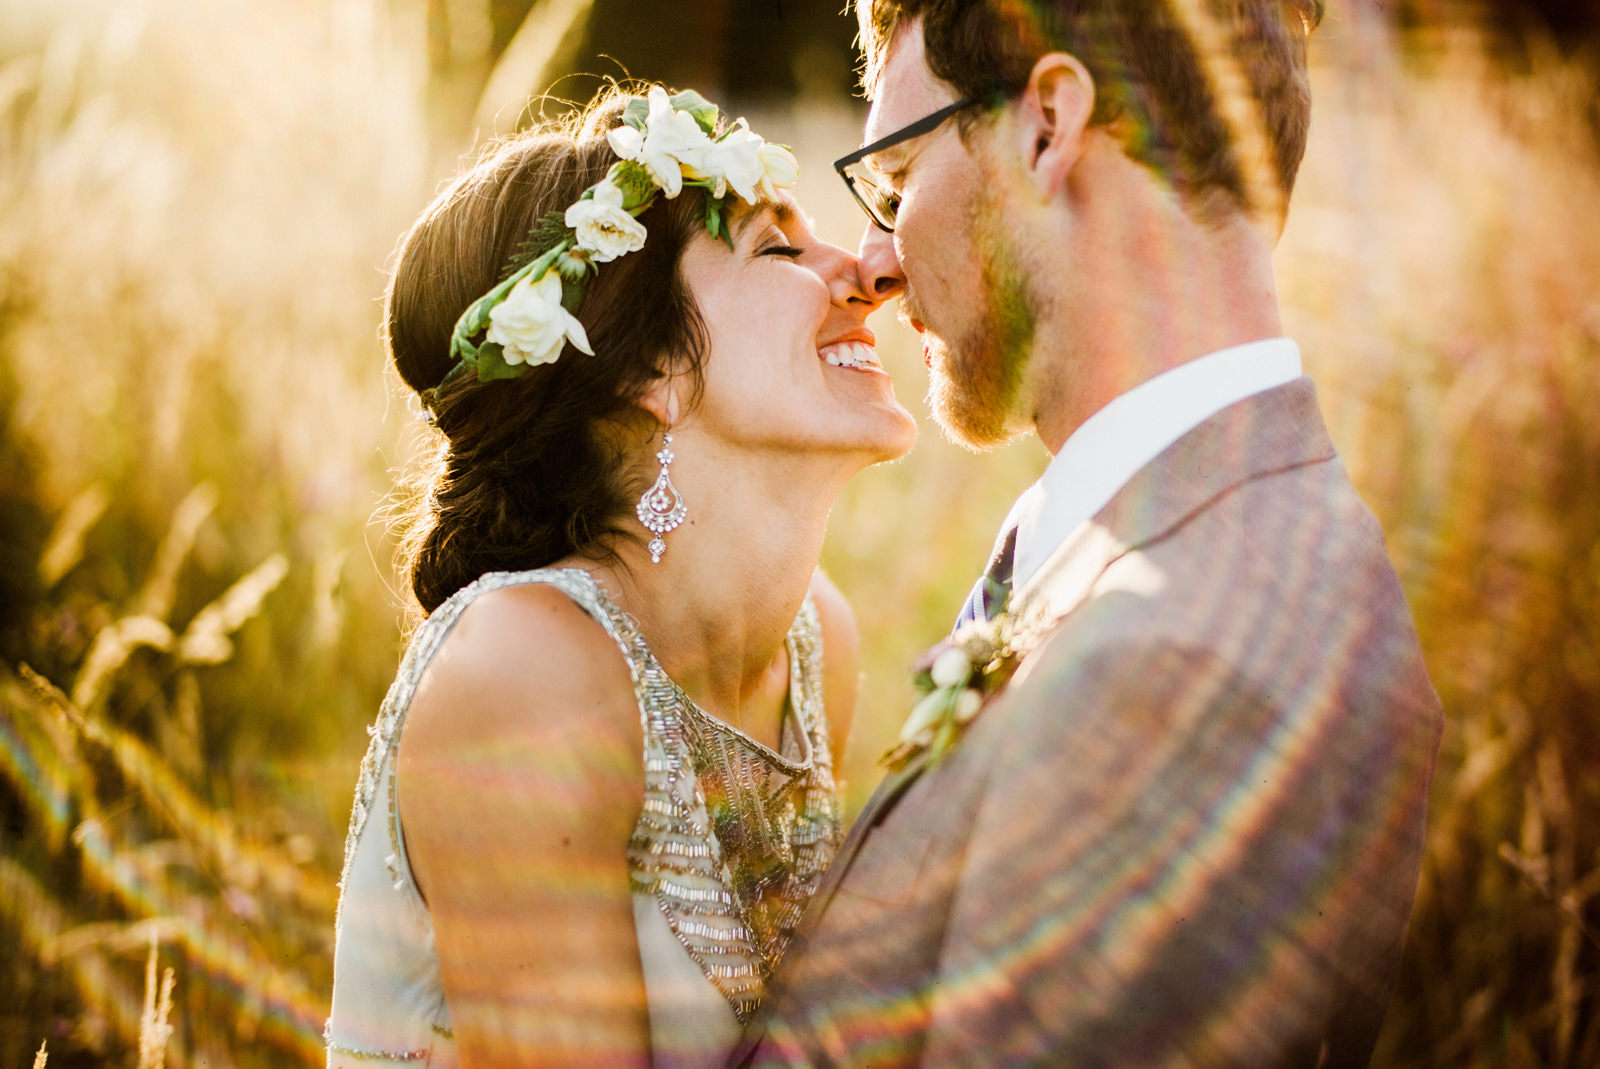 072-joyful-wedding-portrait-with-sunflare-and-pale-green-wedding-dress-by-orcas-island-wedding-photographer.jpg